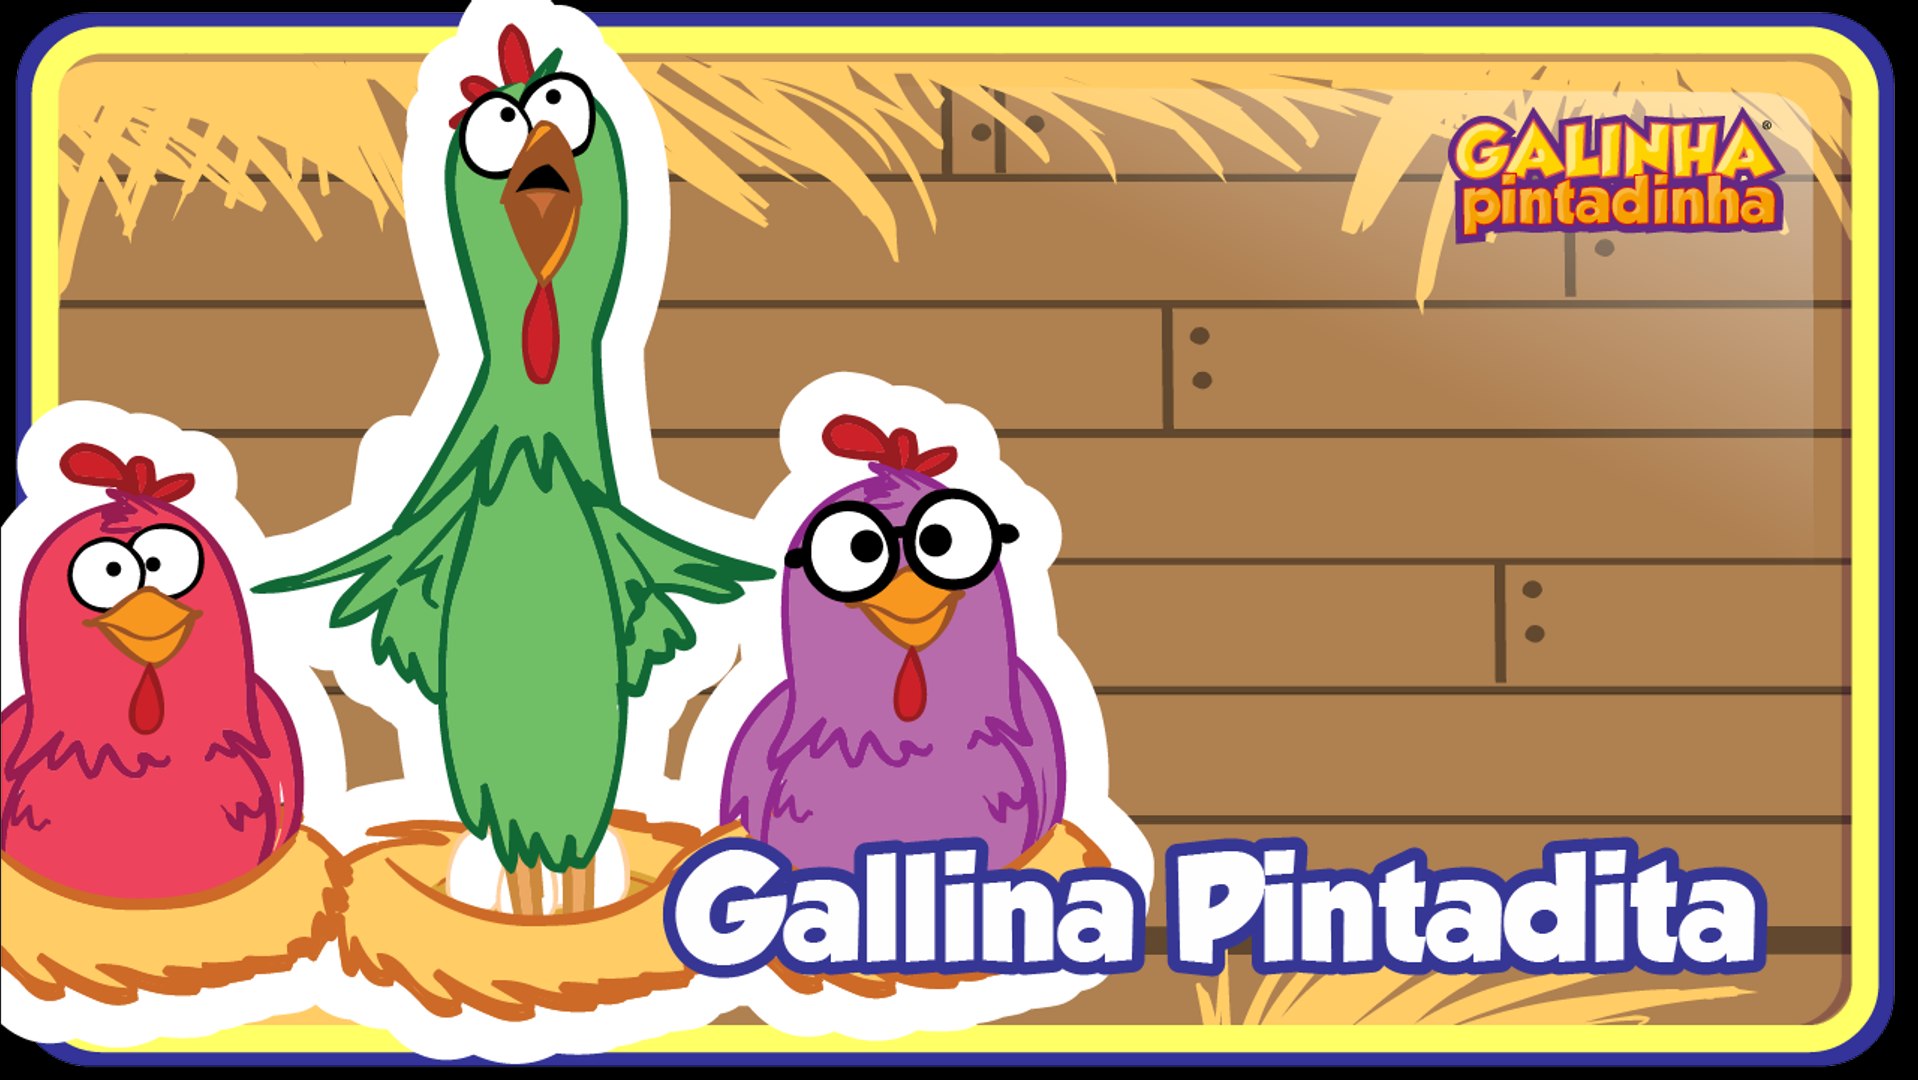 Vídeos Galinha Pintadinha - Dailymotion